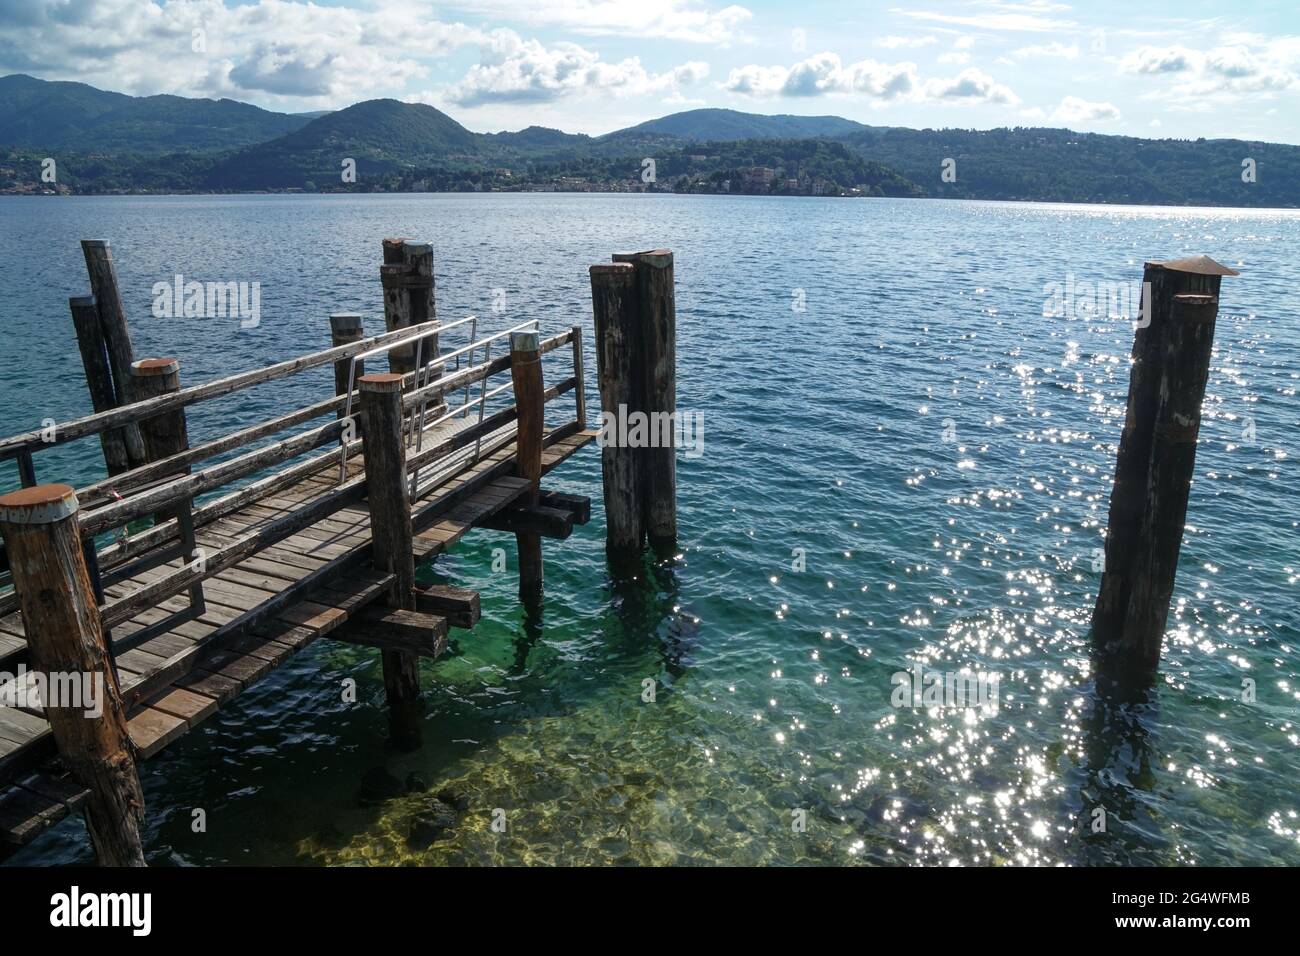 Pella - 07/12/2020: lboarding pier on Ortas's lake, Italy Stock Photo